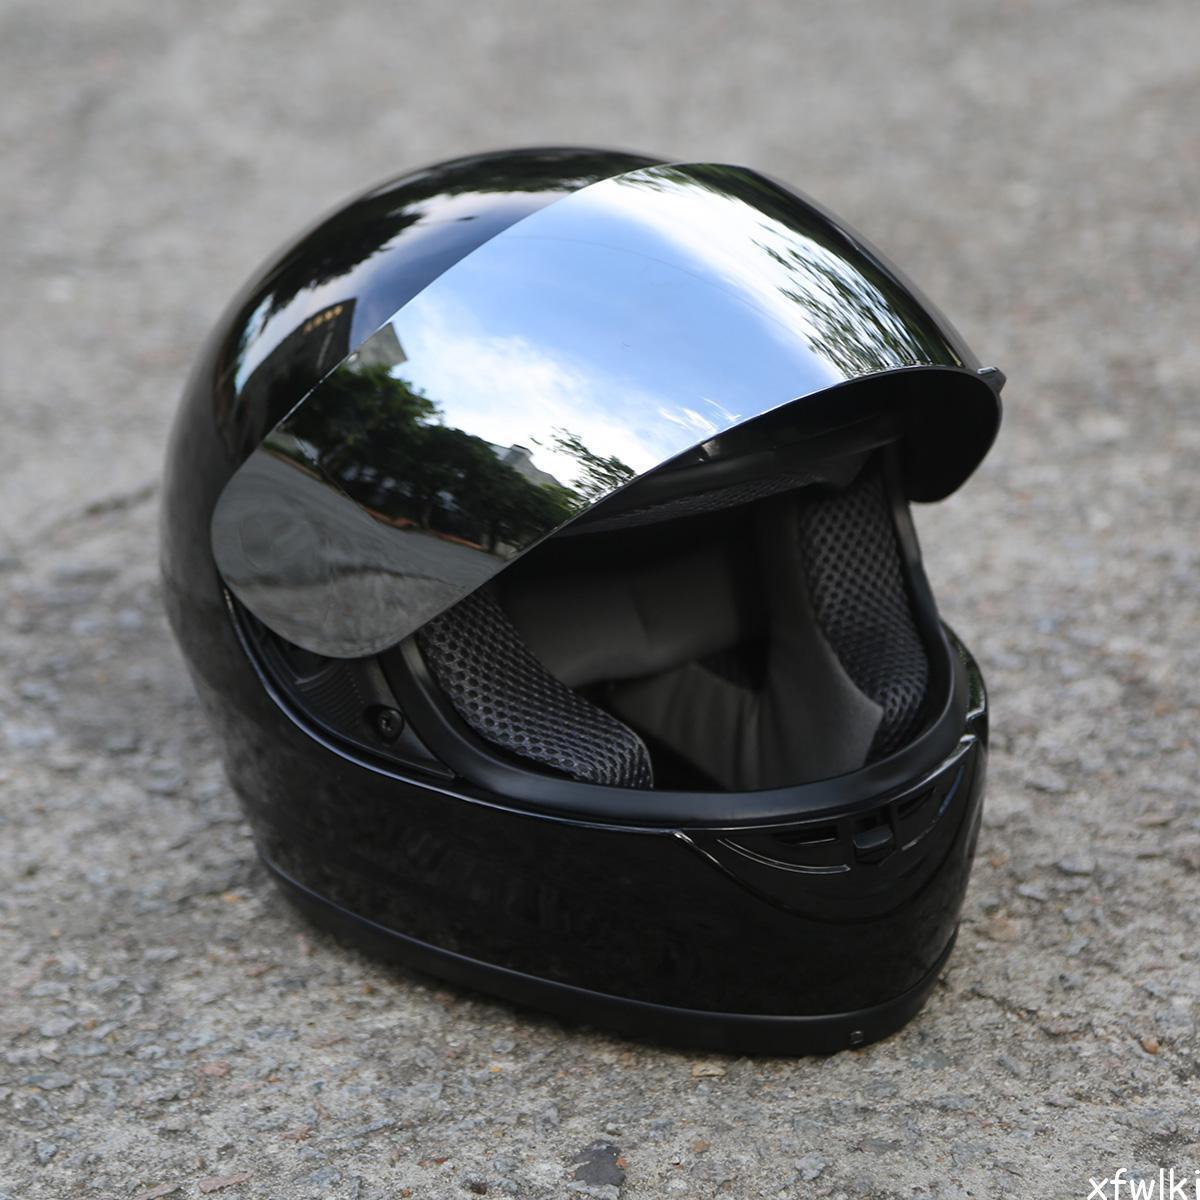 Motorcycle Mirror Shield Gloss FullFace DOT Adult Helmet (Black, Size S/L/XL) $29.75 + Free Shipping